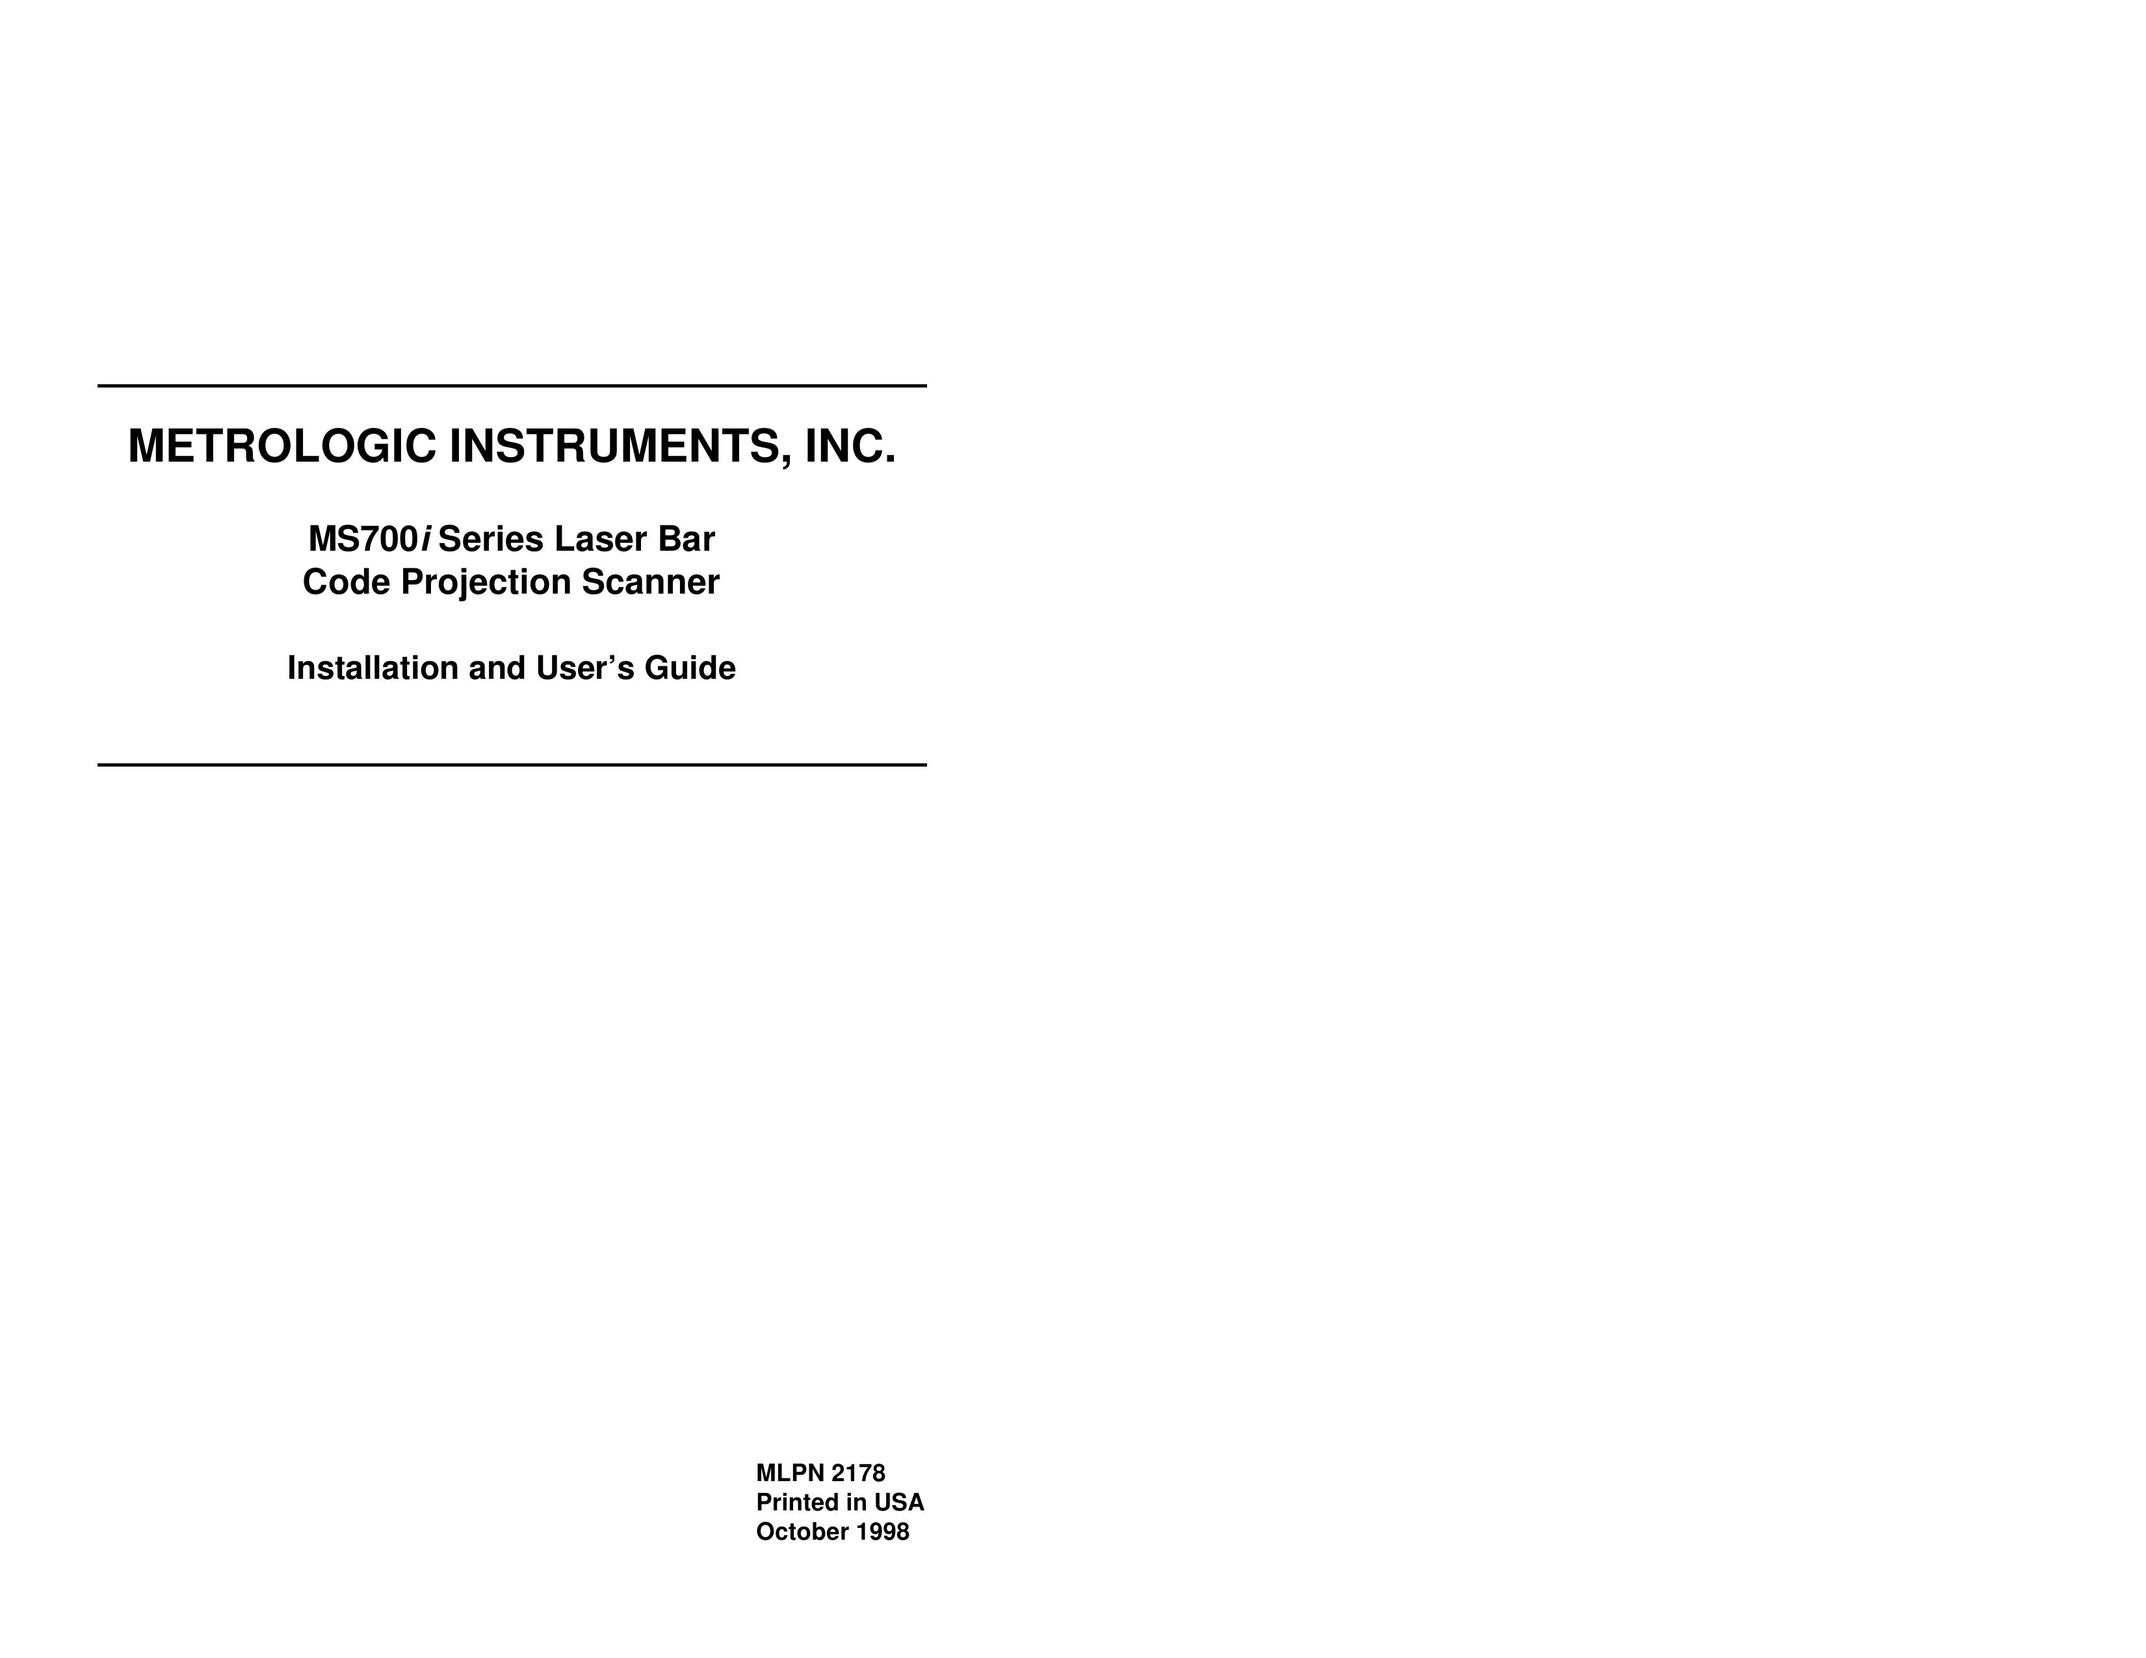 Metrologic Instruments MLPN 2178 Barcode Reader User Manual